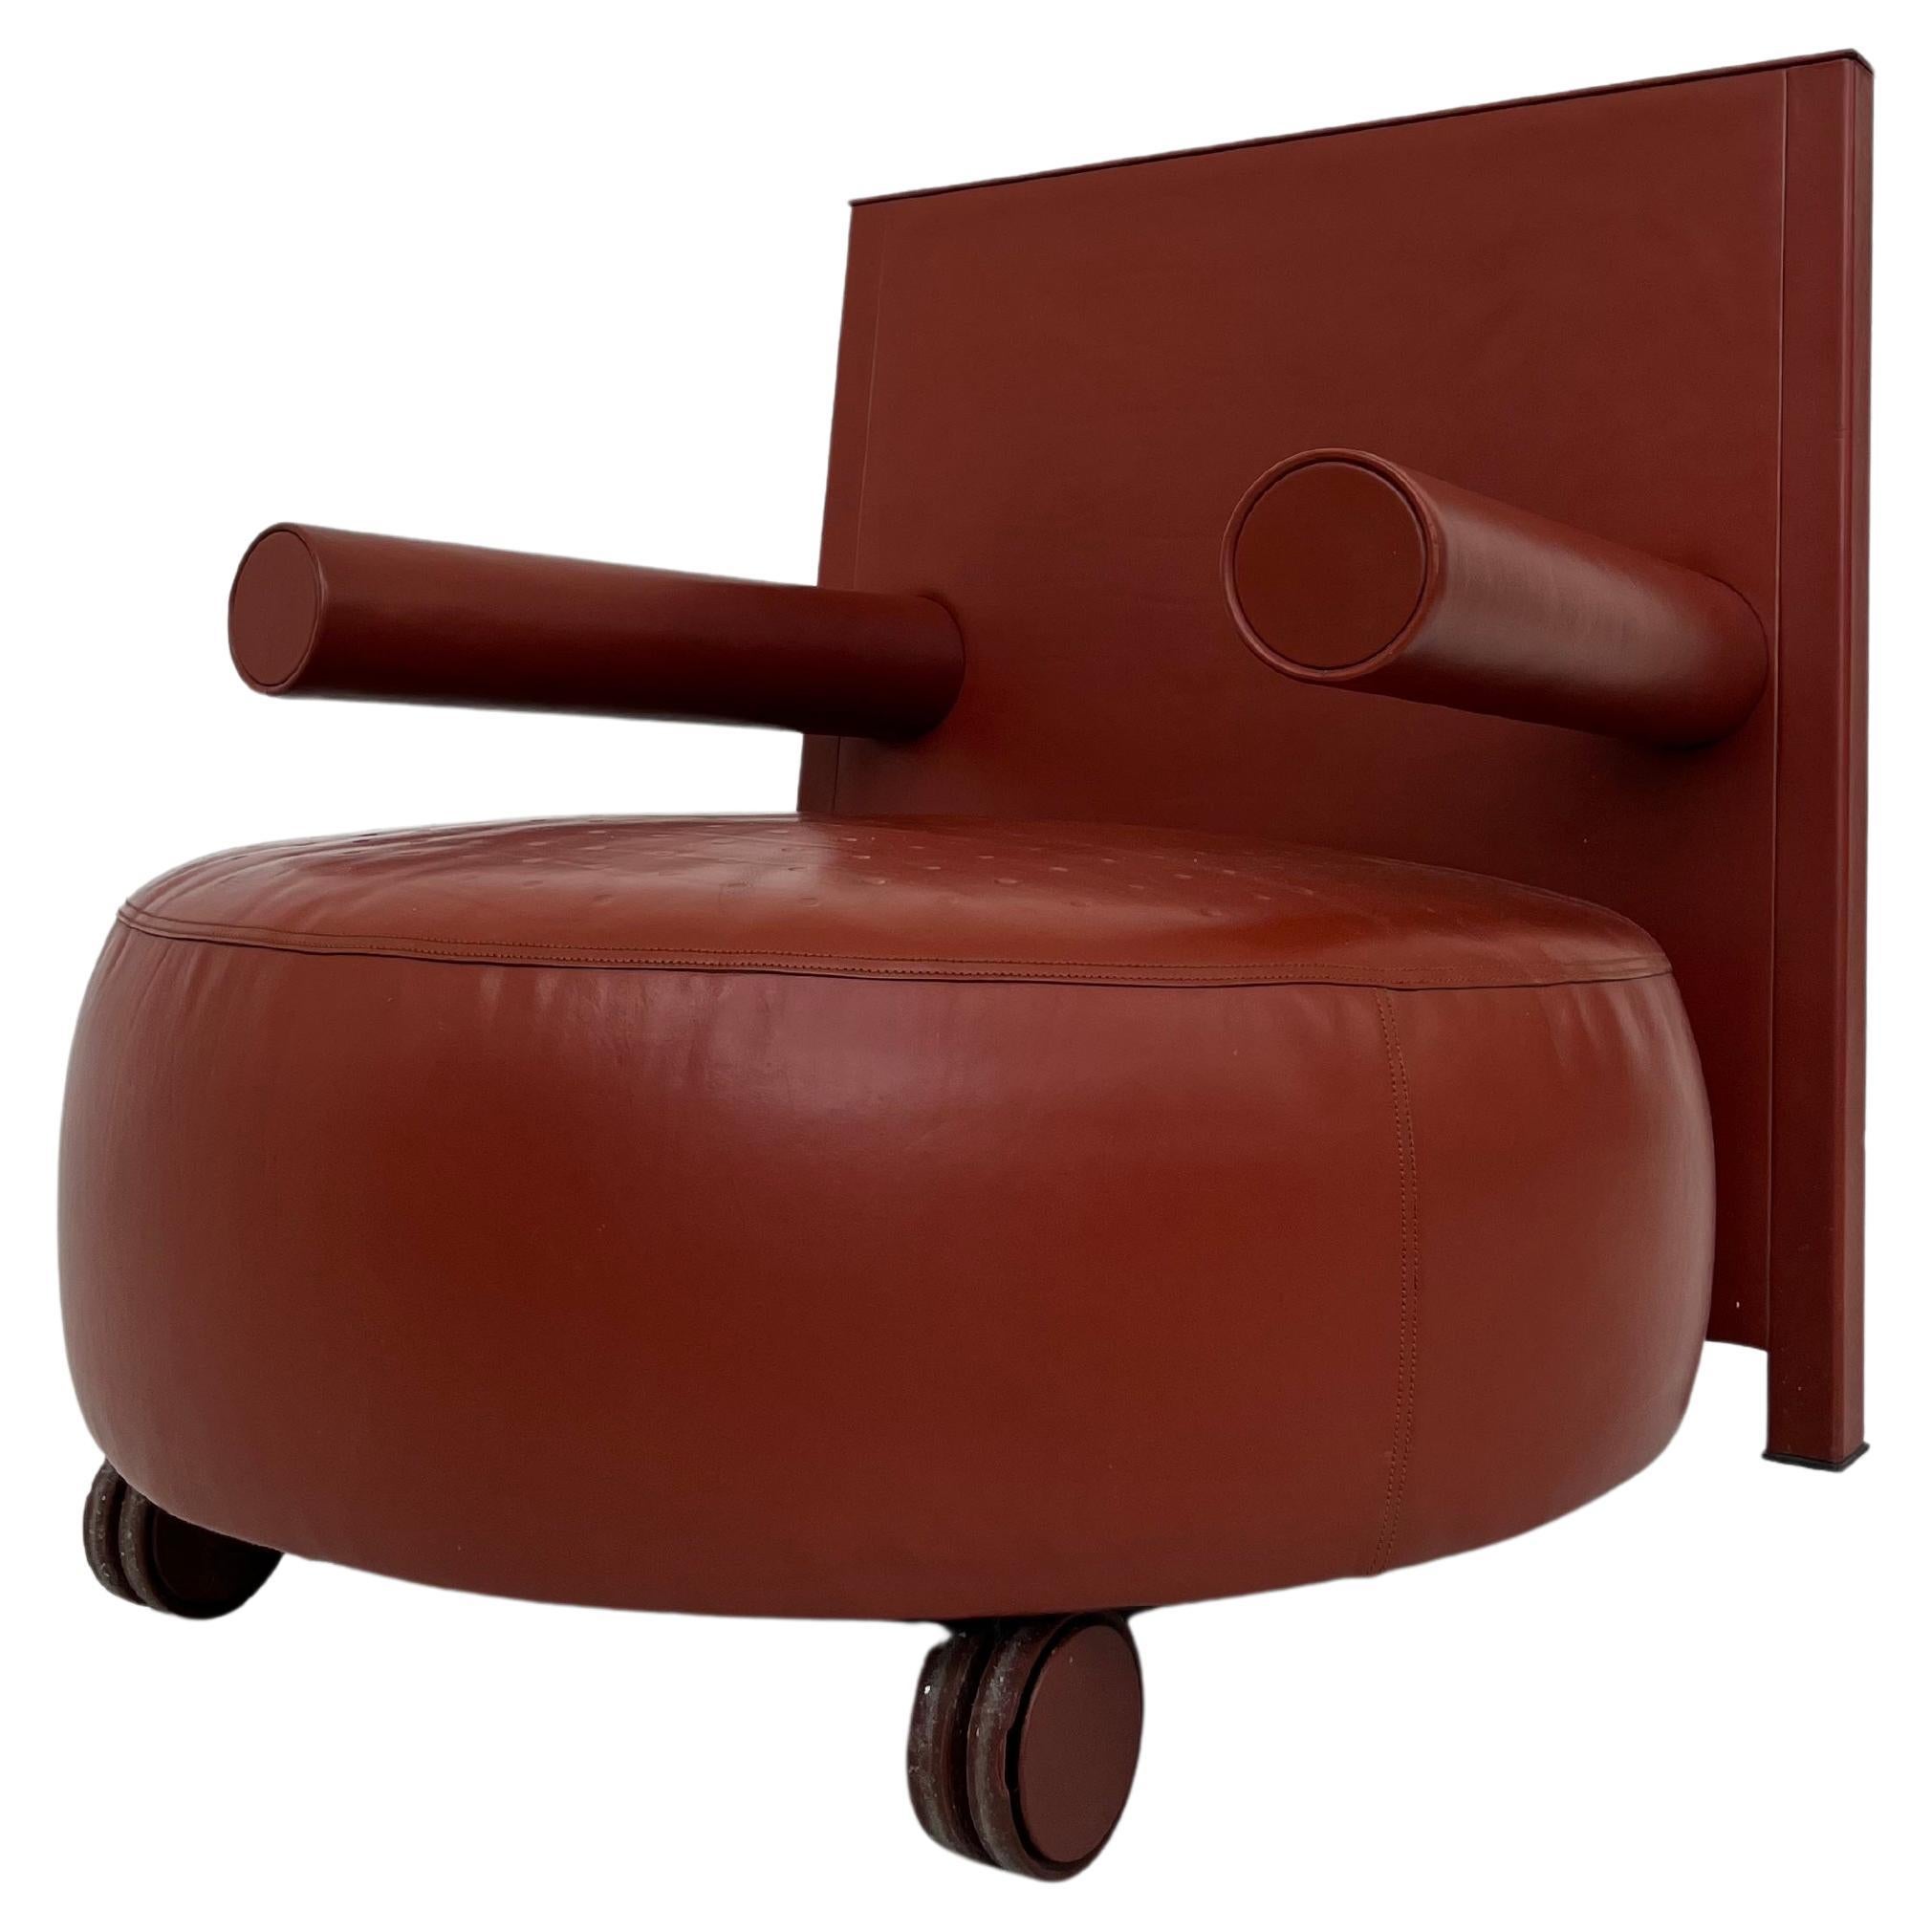 Baisity leather armchair by Antonio Citterio for B&B Italia 80s, 90s